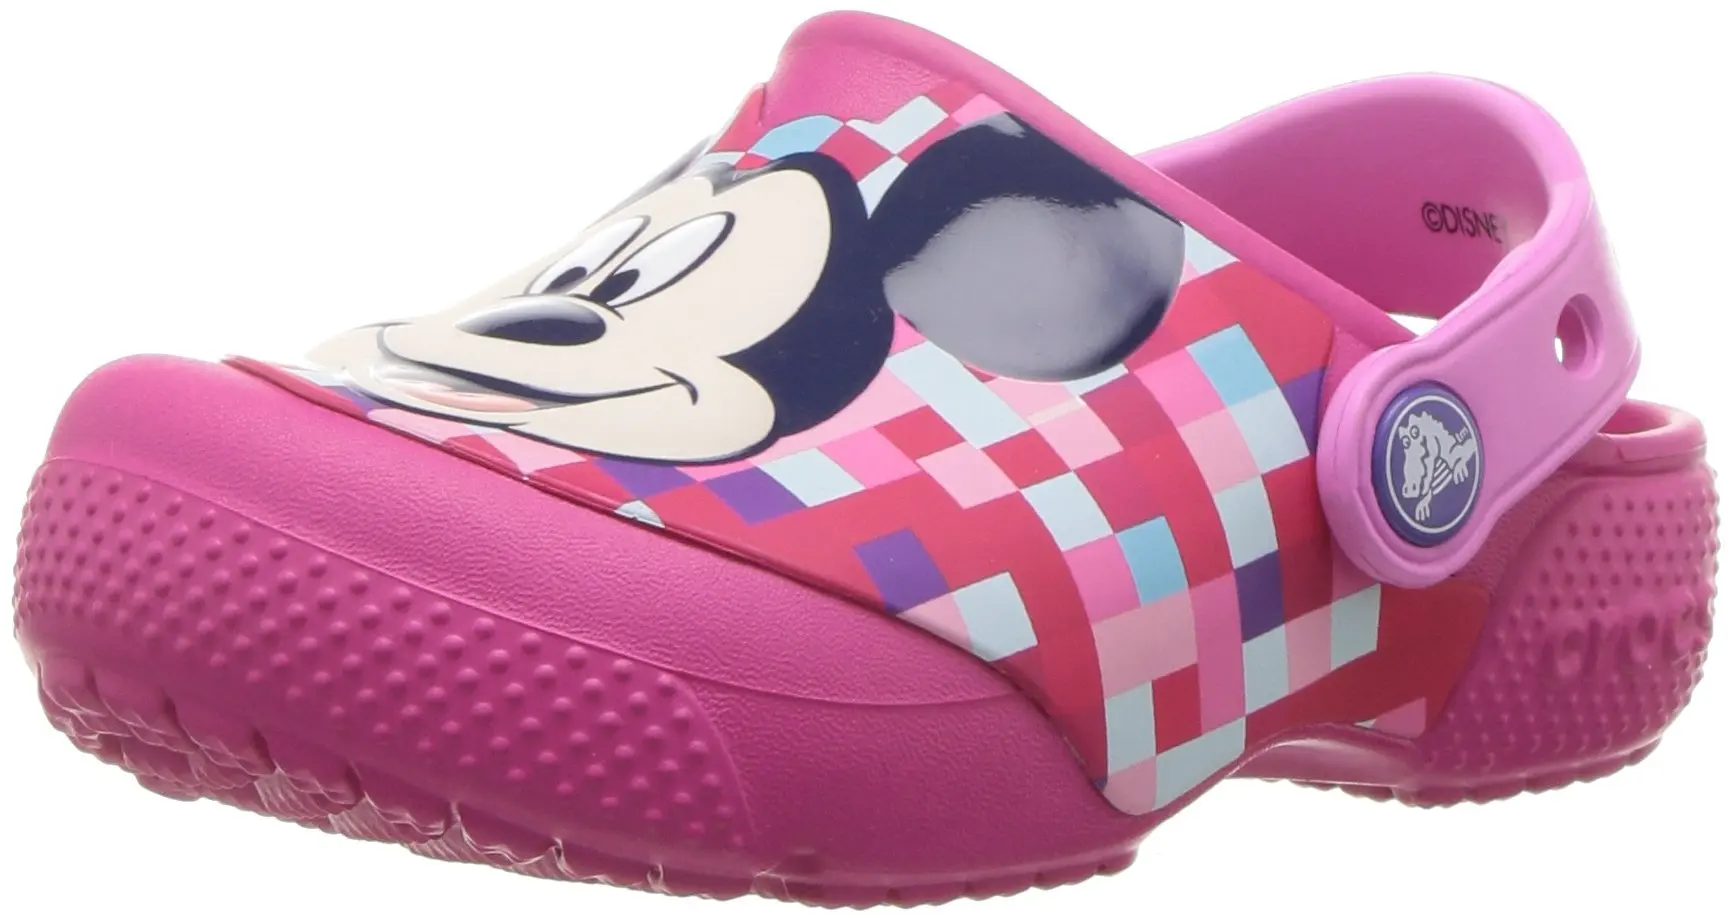 Cheap Crocs Mickey, find Crocs Mickey deals on line at Alibaba.com